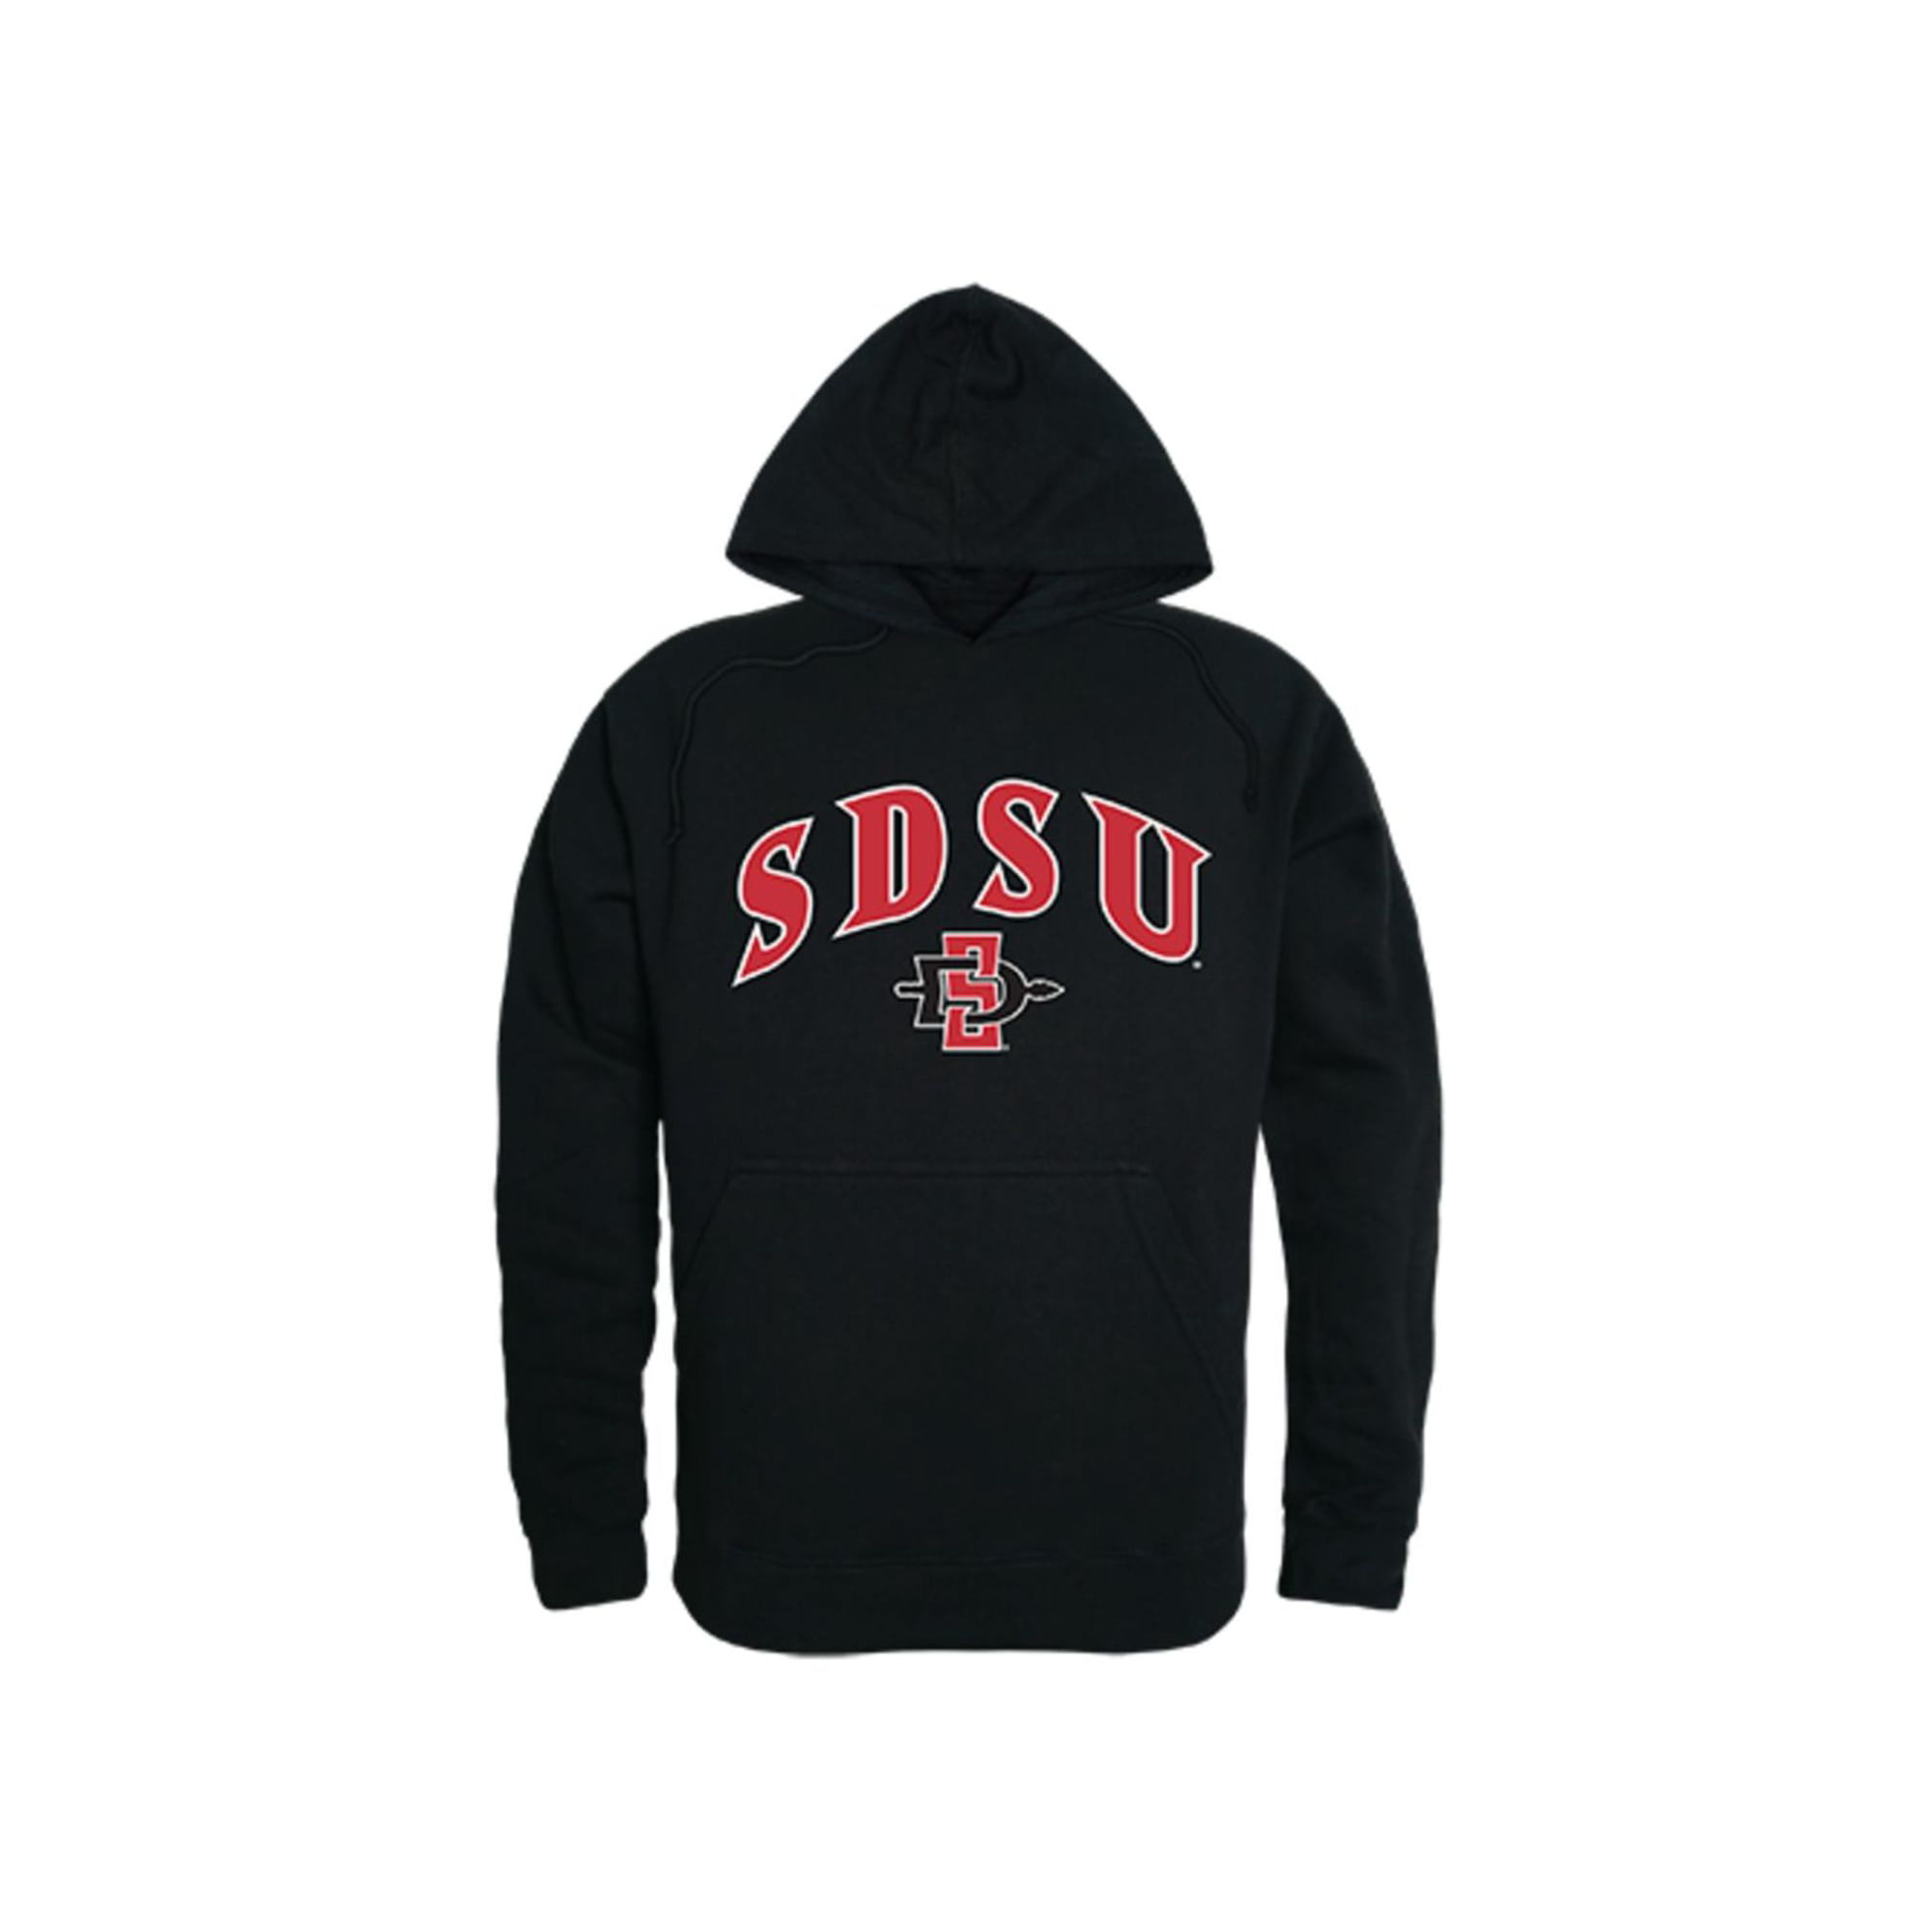 SDSU San Diego State University Aztecs Campus Hoodie Sweatshirt Black 